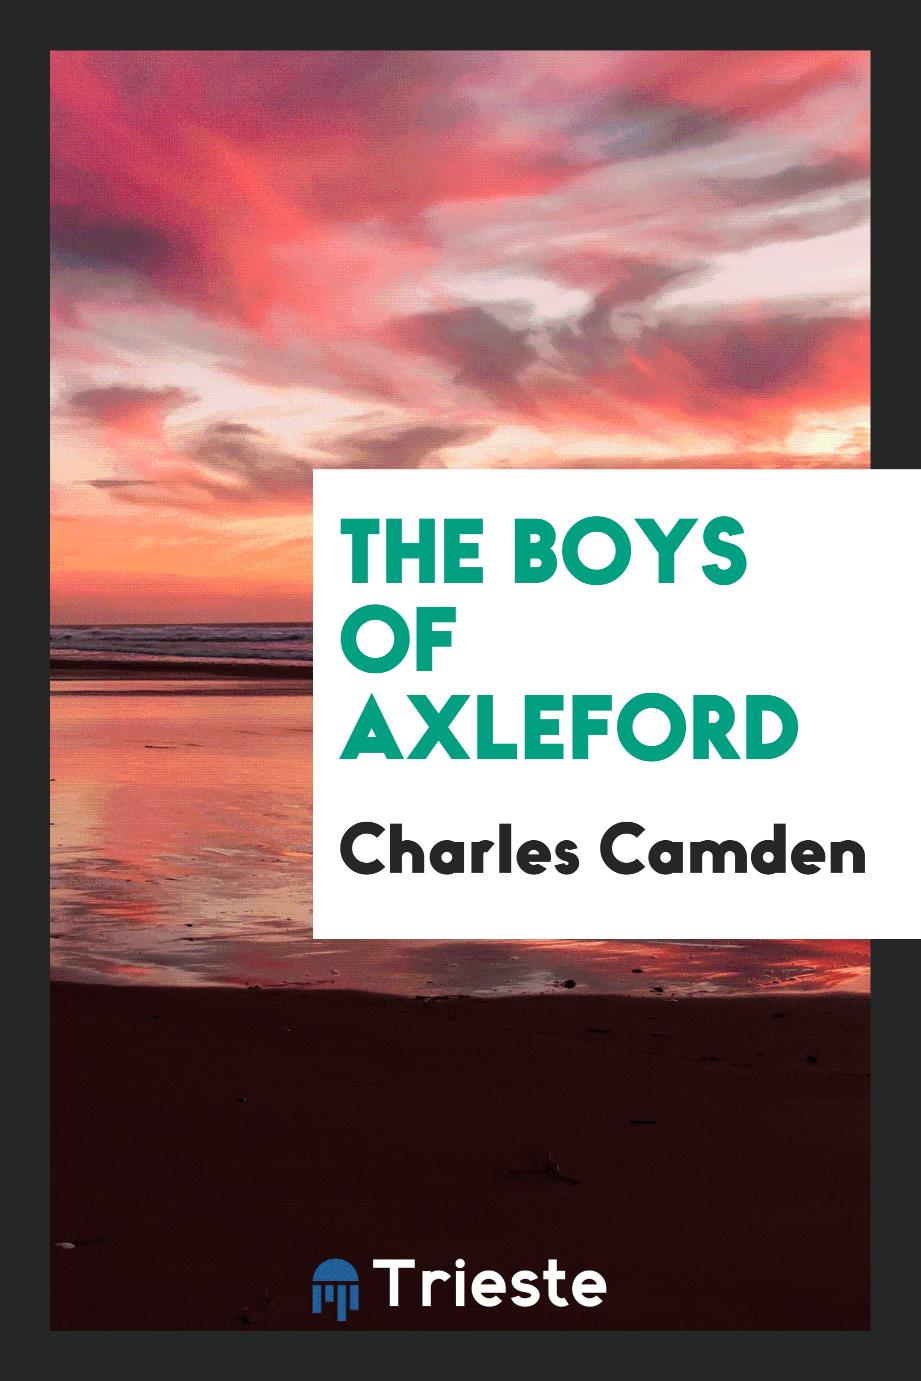 The boys of Axleford